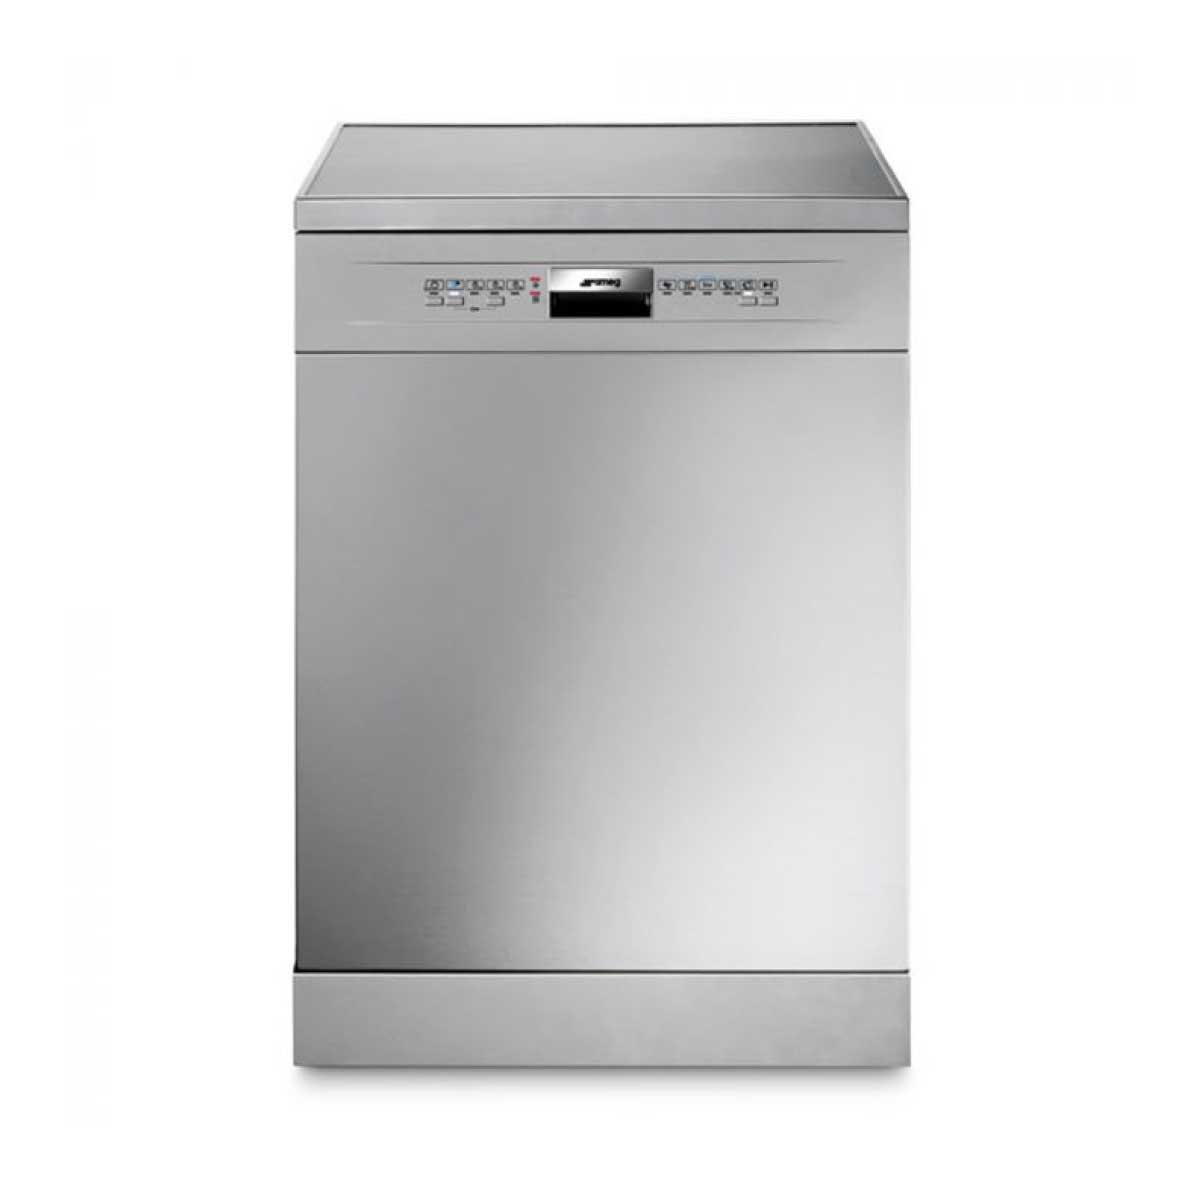 Smeg 13Pl 60cm Silver Dishwasher